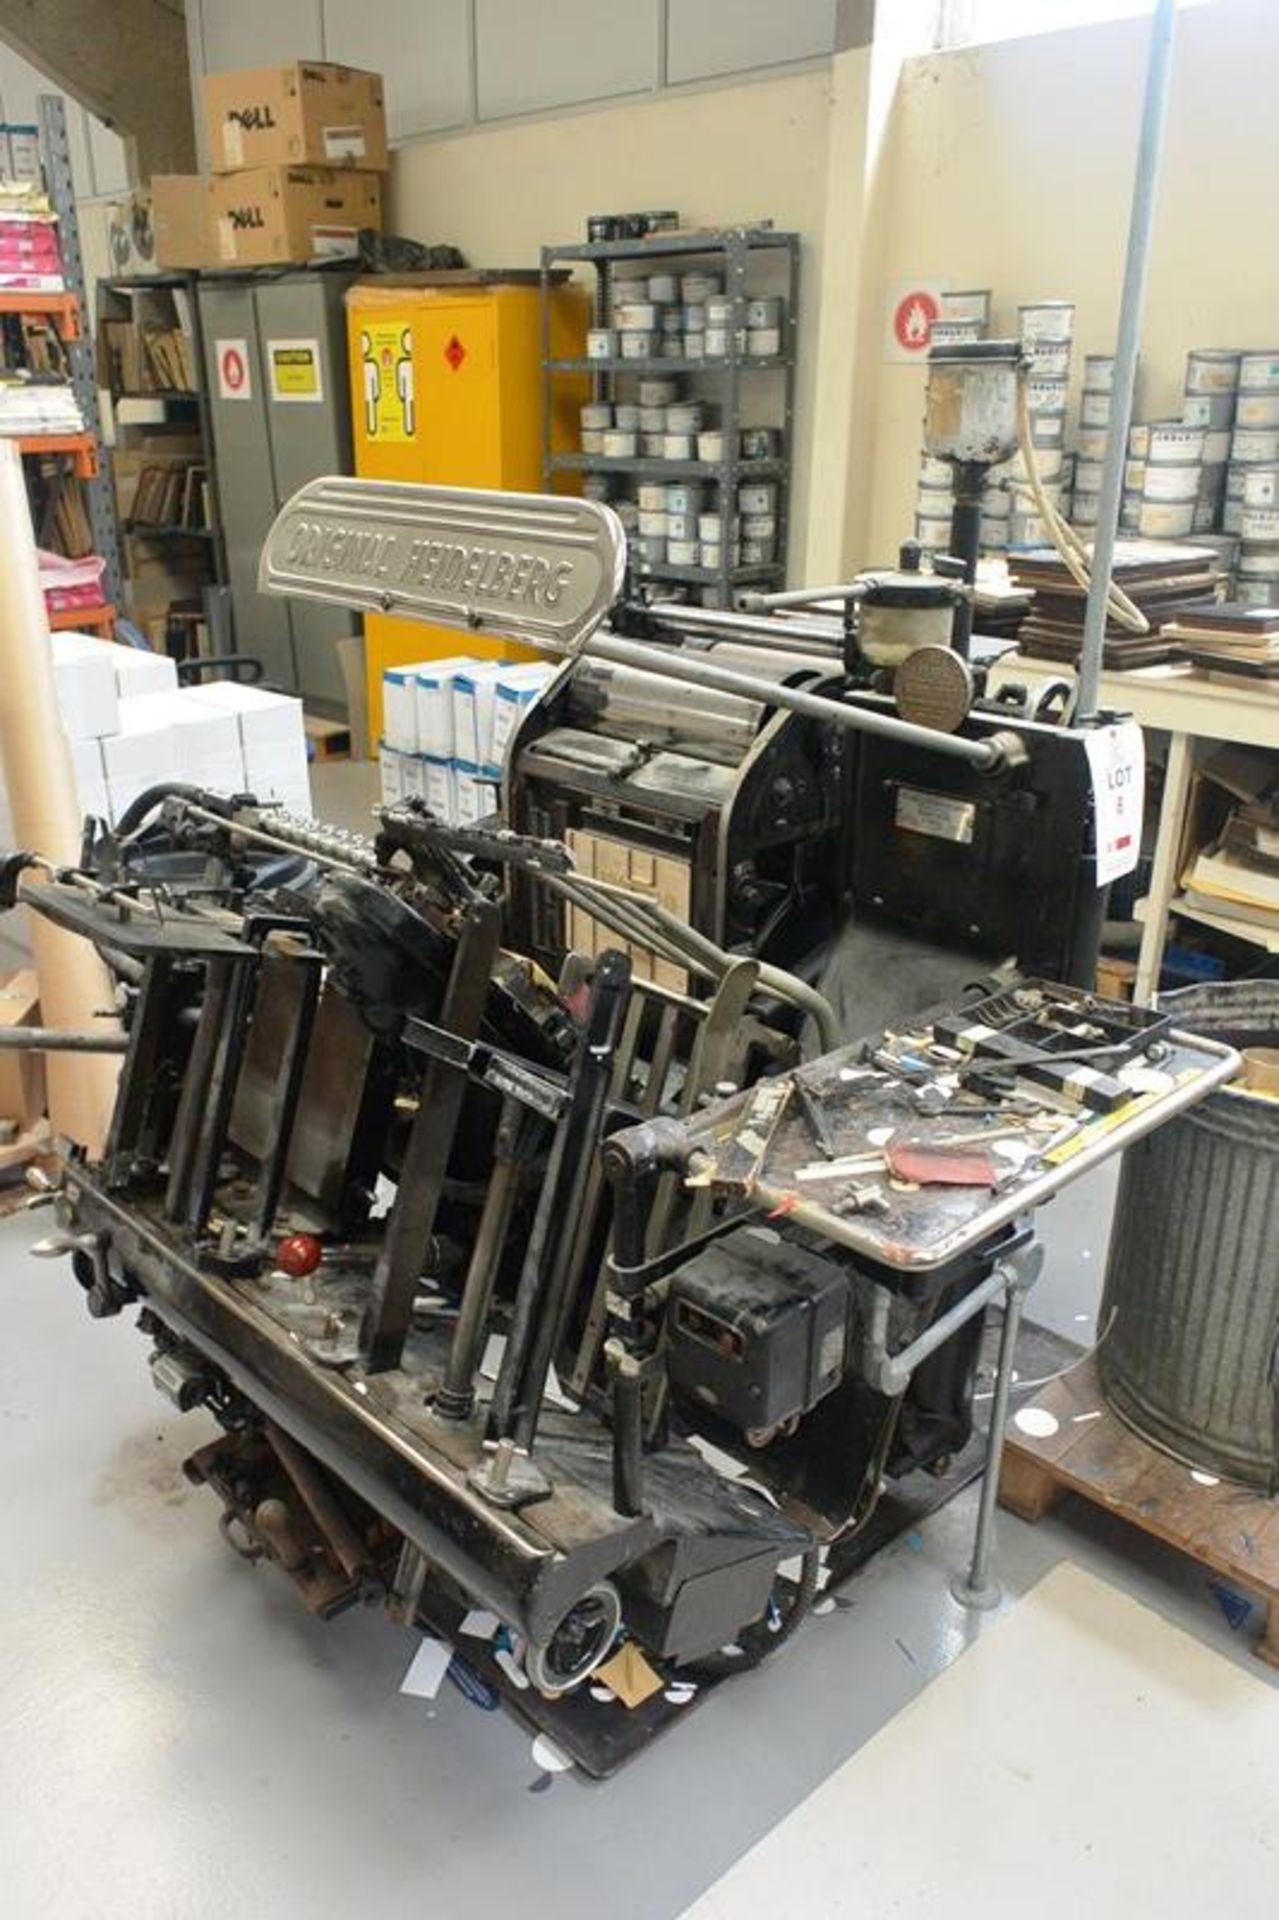 Original Heidelberg platen type cutting and creasing press, serial no. 138280E, 34 x 26cm platen